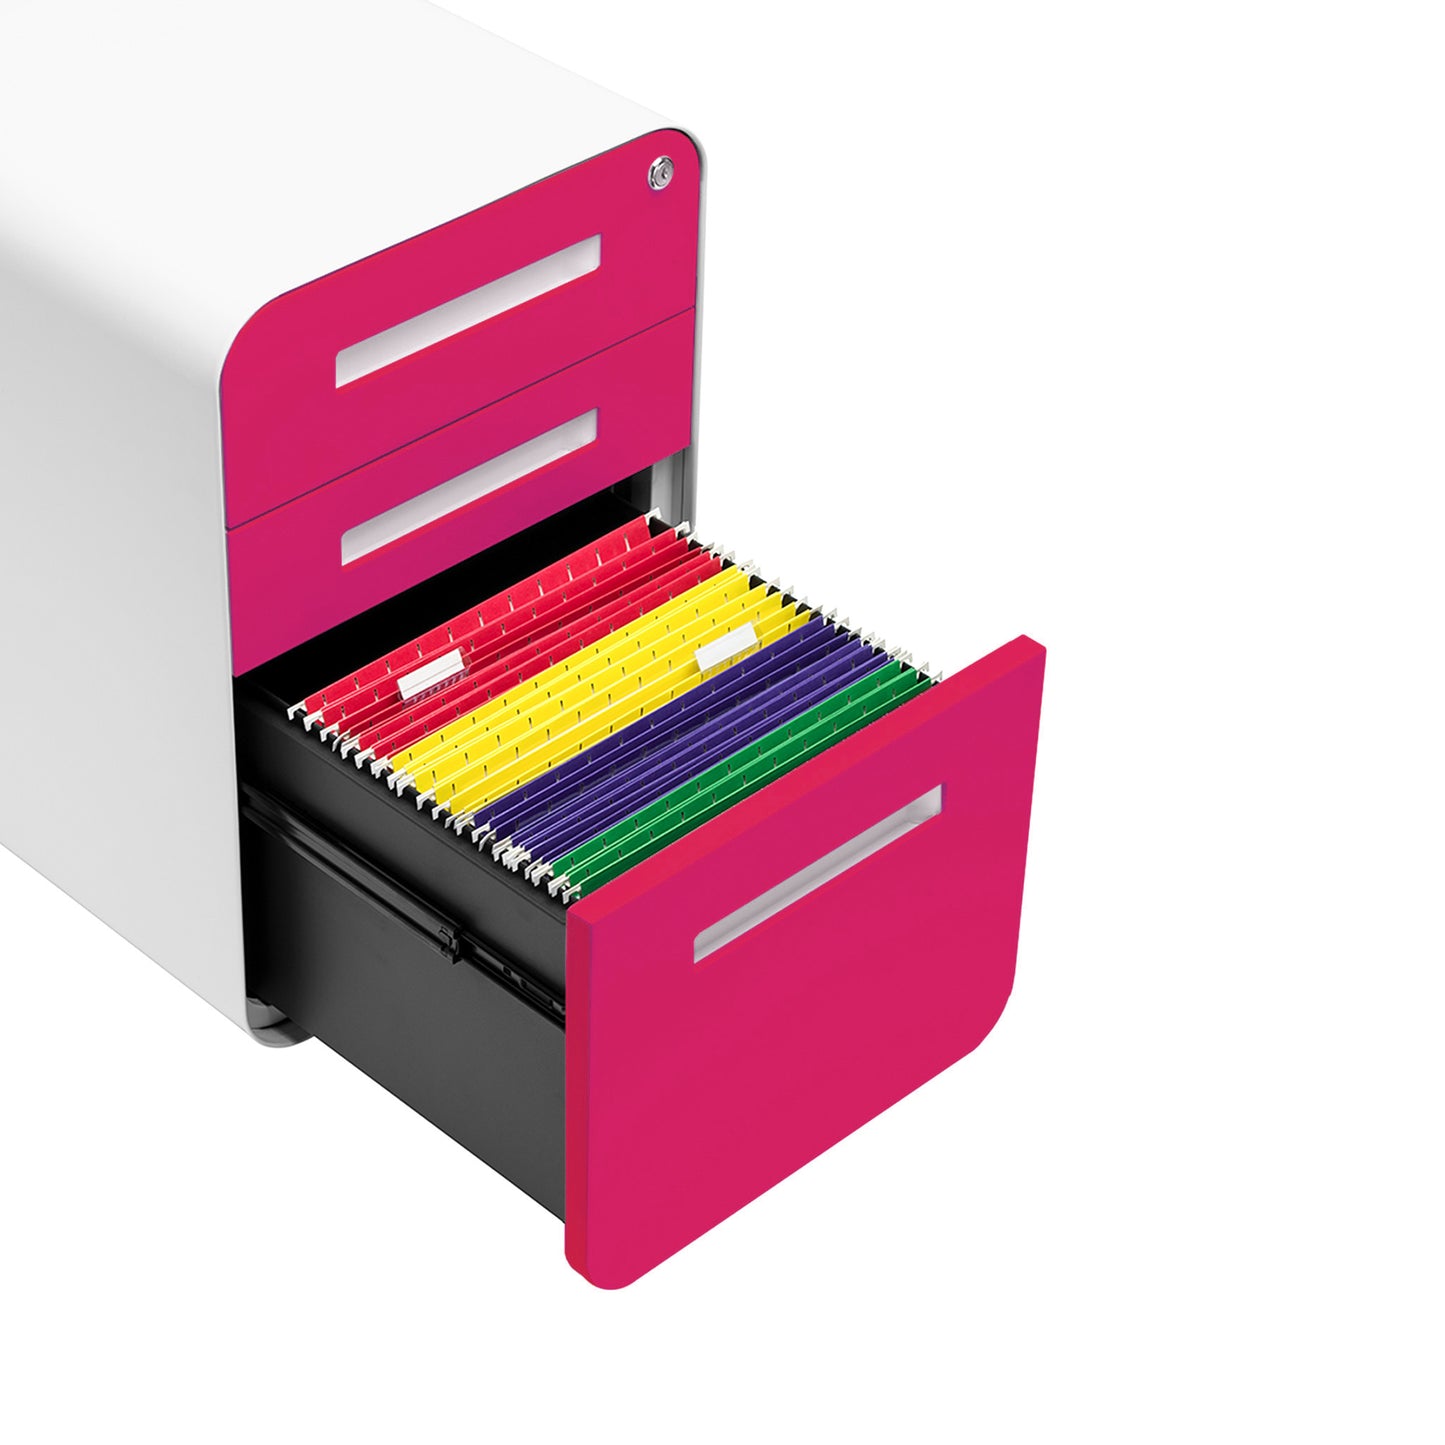 Stockpile Curve File Cabinet (Hot Pink Faceplate)